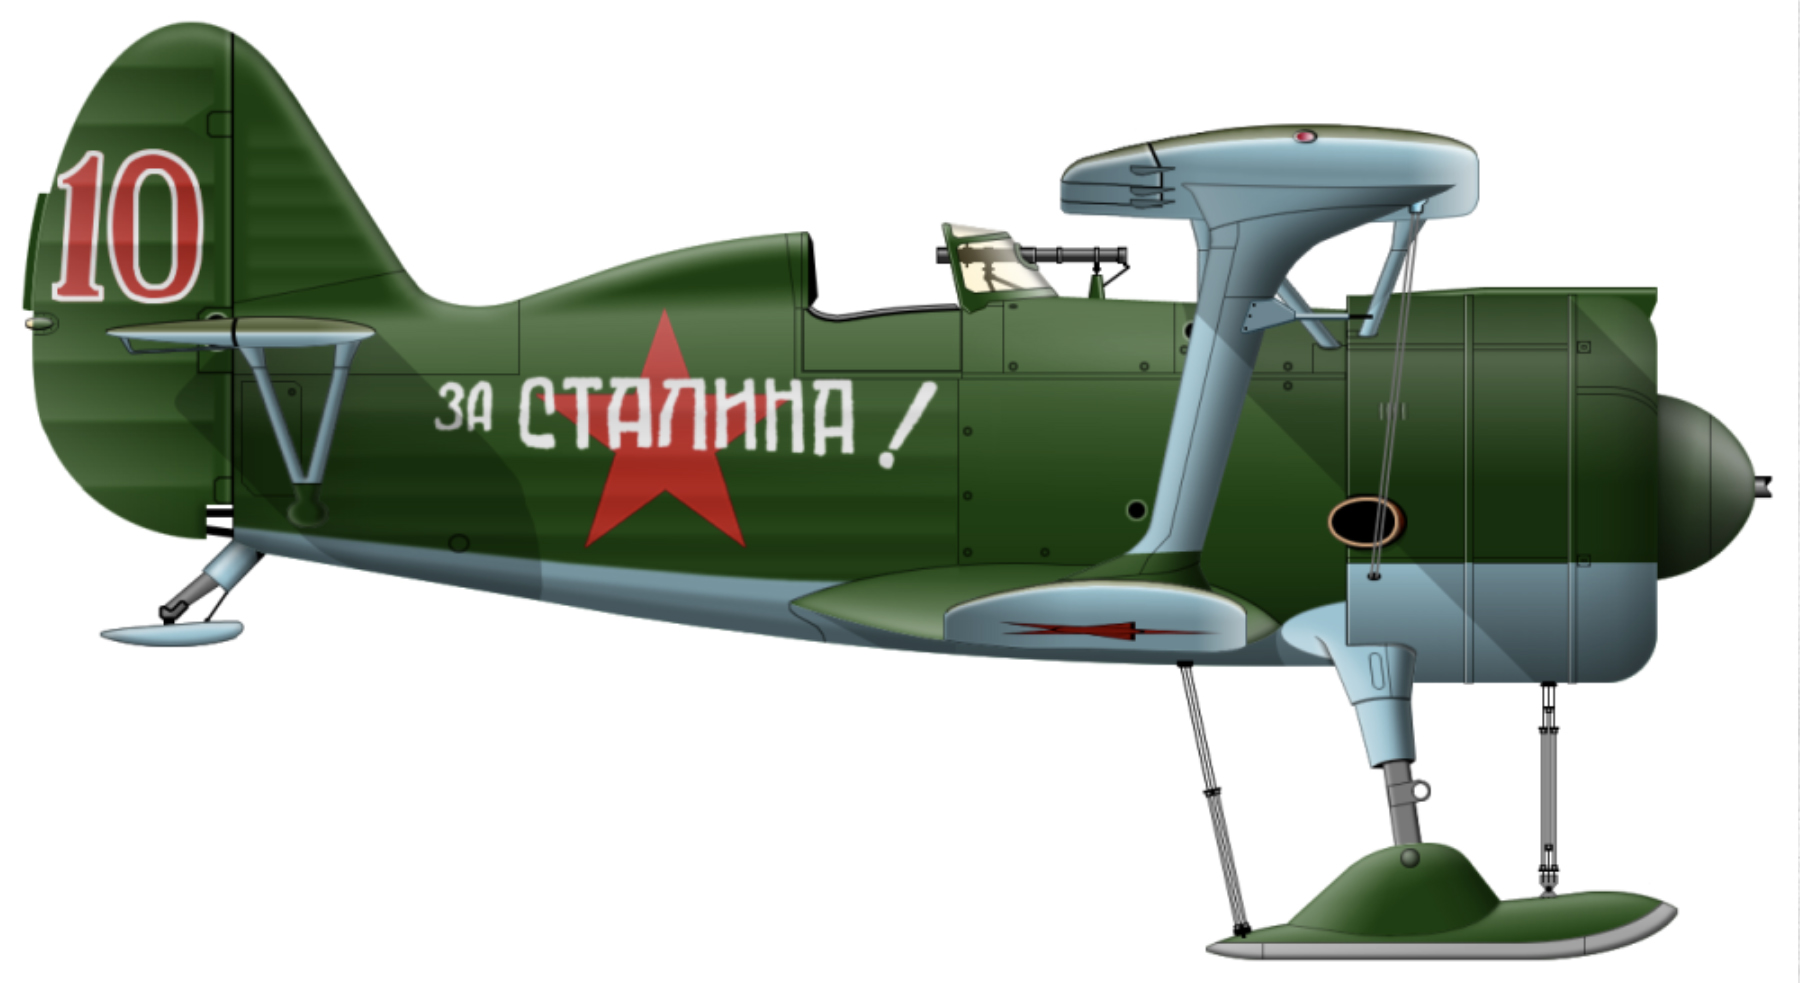 WW Polikarpov I 153 13AE 61AB KBF Red 10 slogan for Stalin HSU Volosevich Soviet Finnish war 1939 40 0A